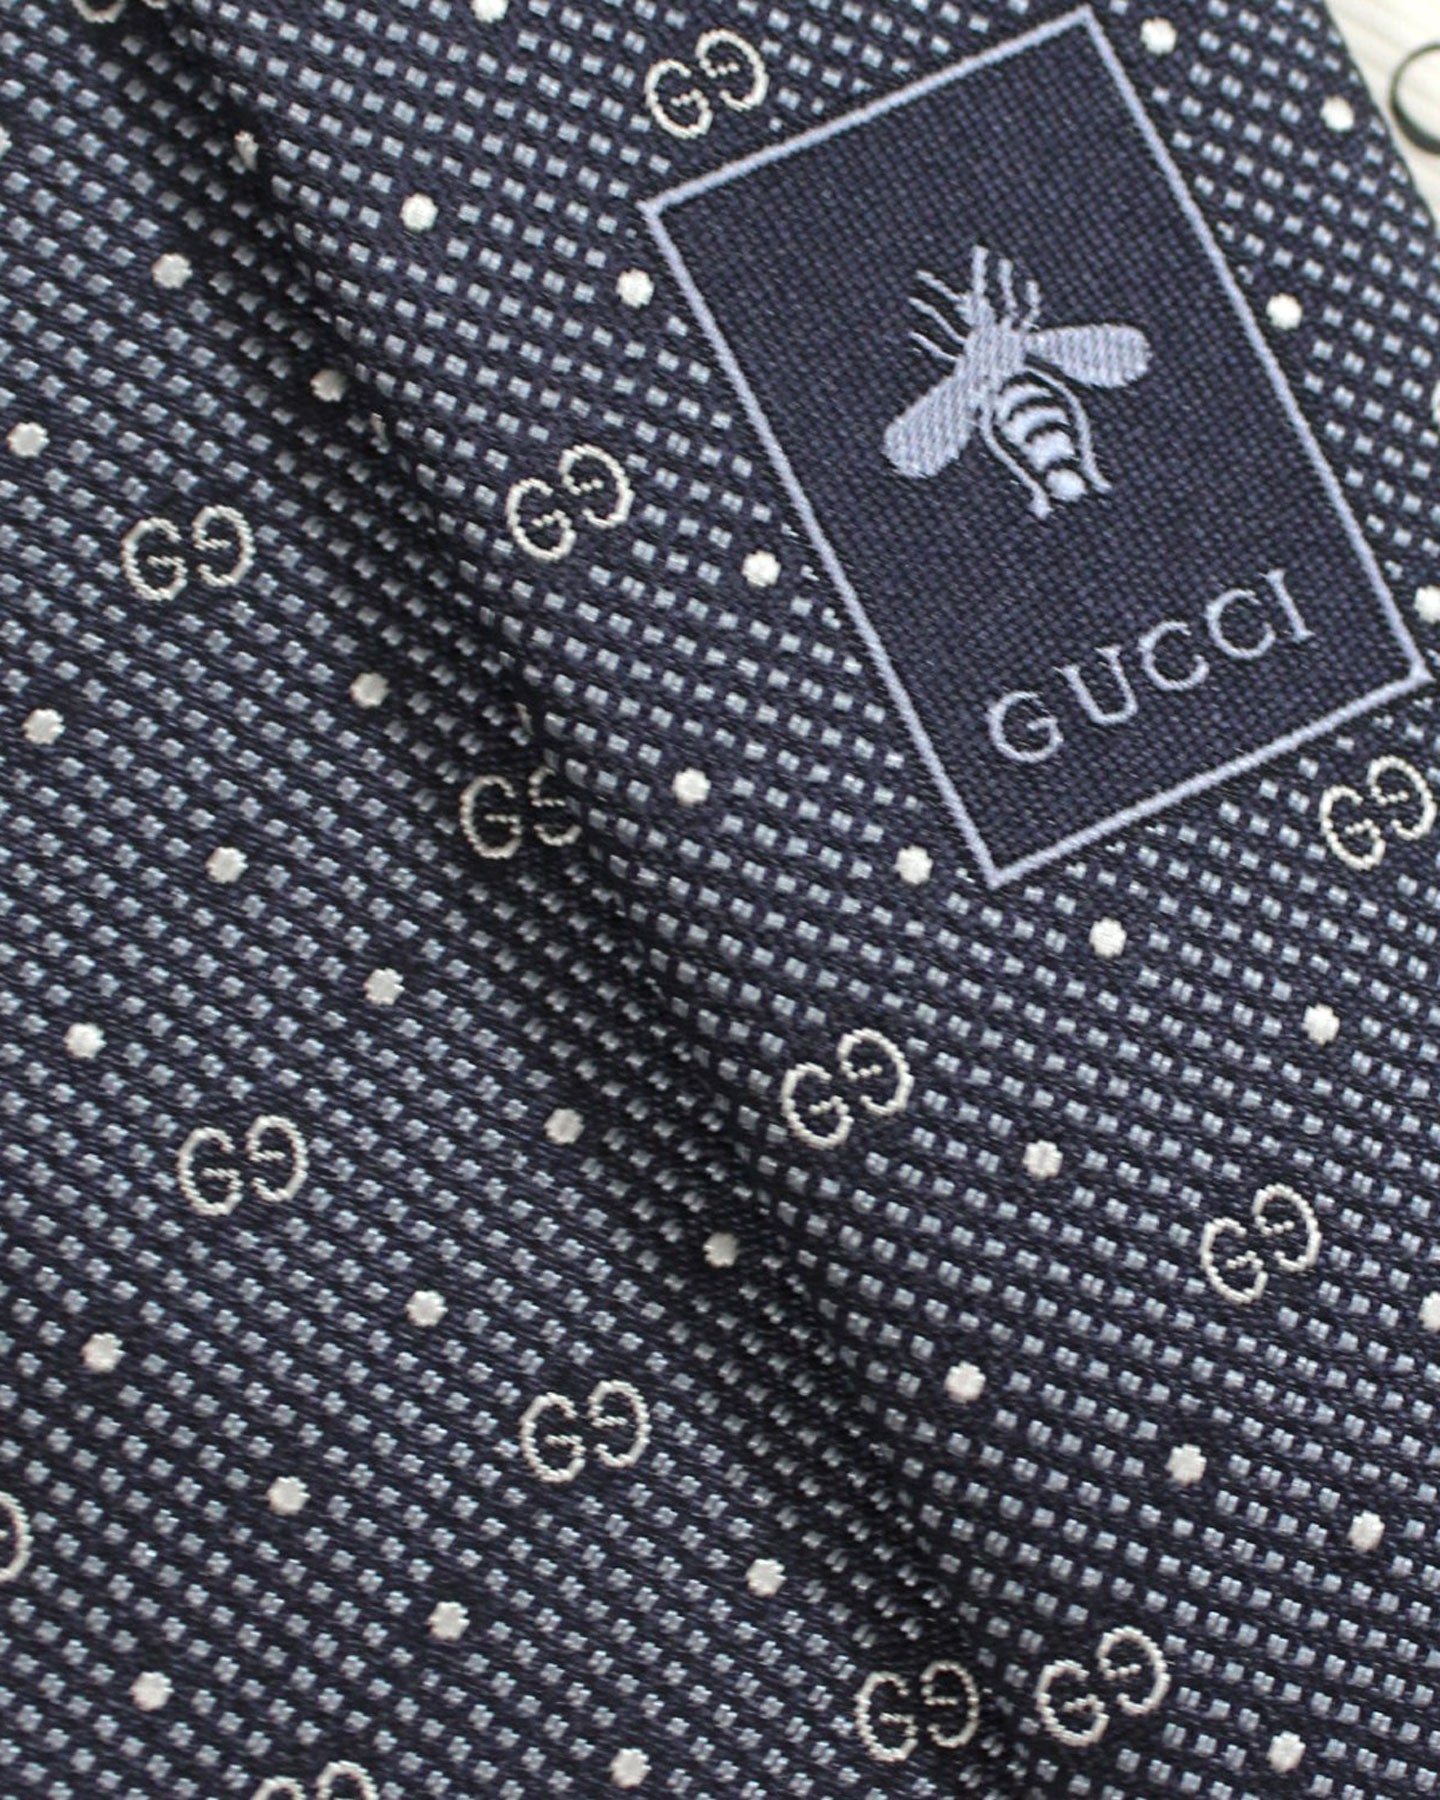 Gucci Silk Tie Navy Silver GG Martin Design